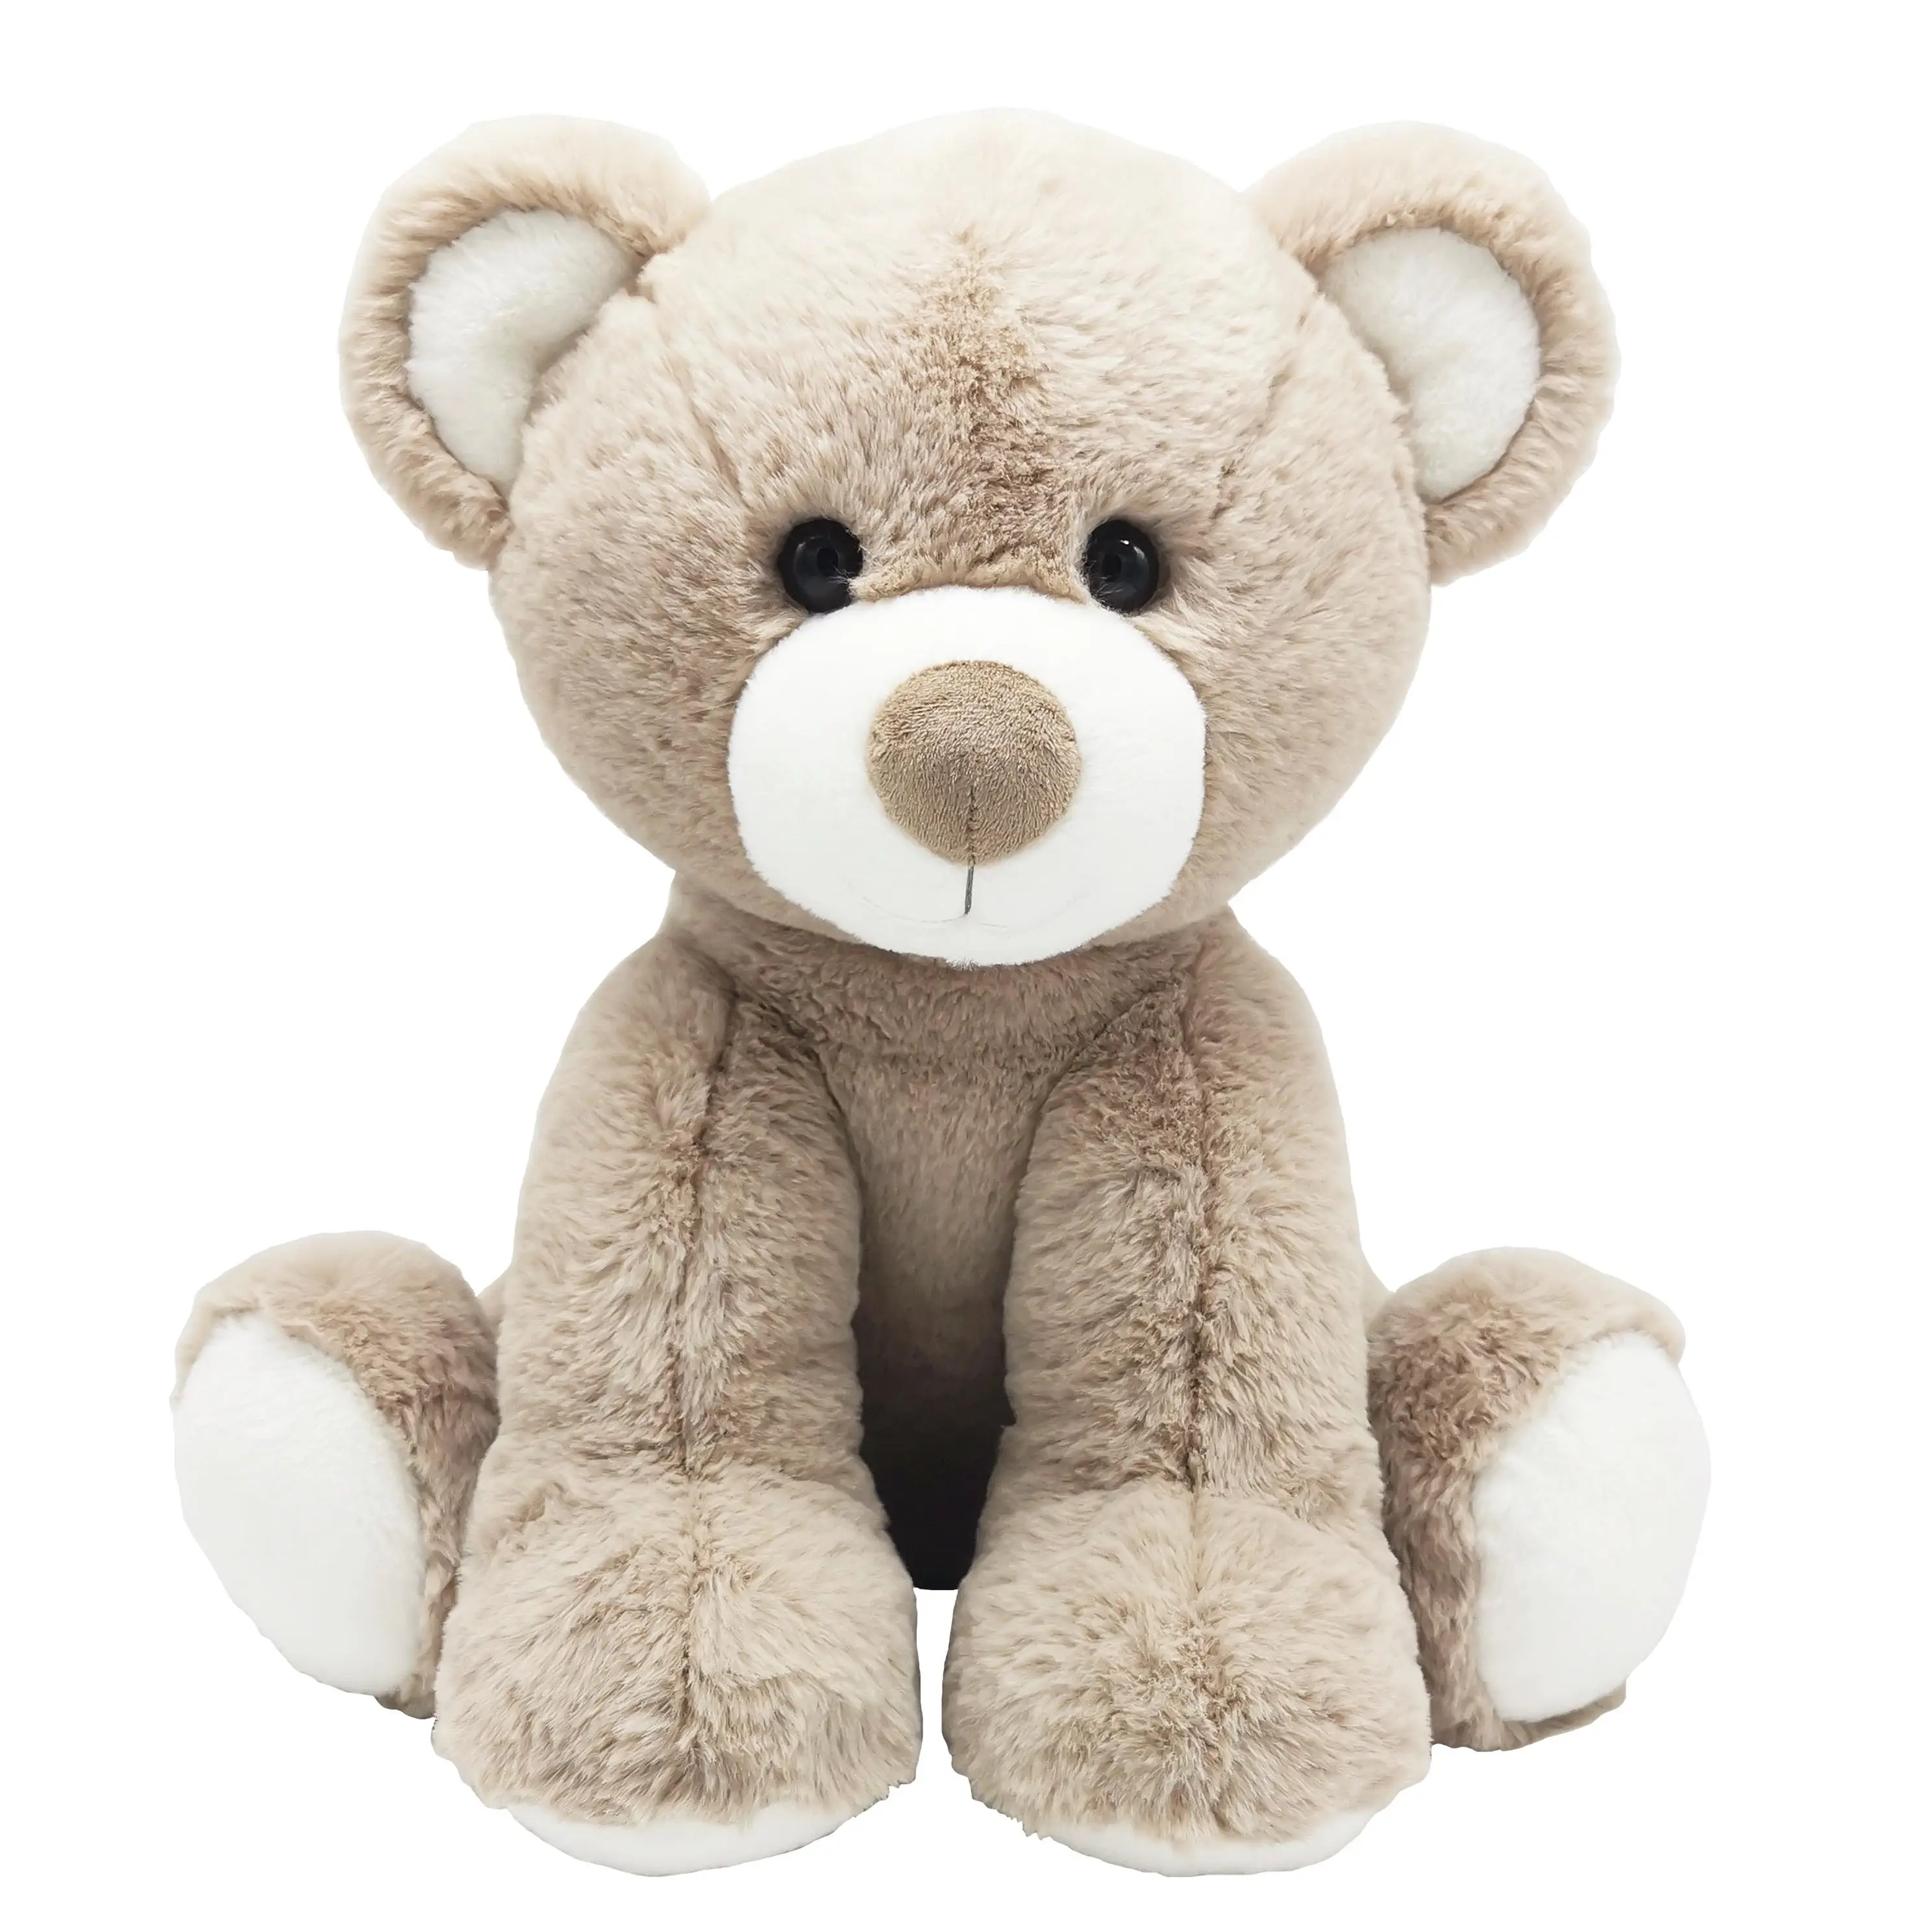 oem/odm Hot Manufacturer Price Cute Farm Christmas soft Stuffed Animal Plush 40cm Teddy Bear doll Toys